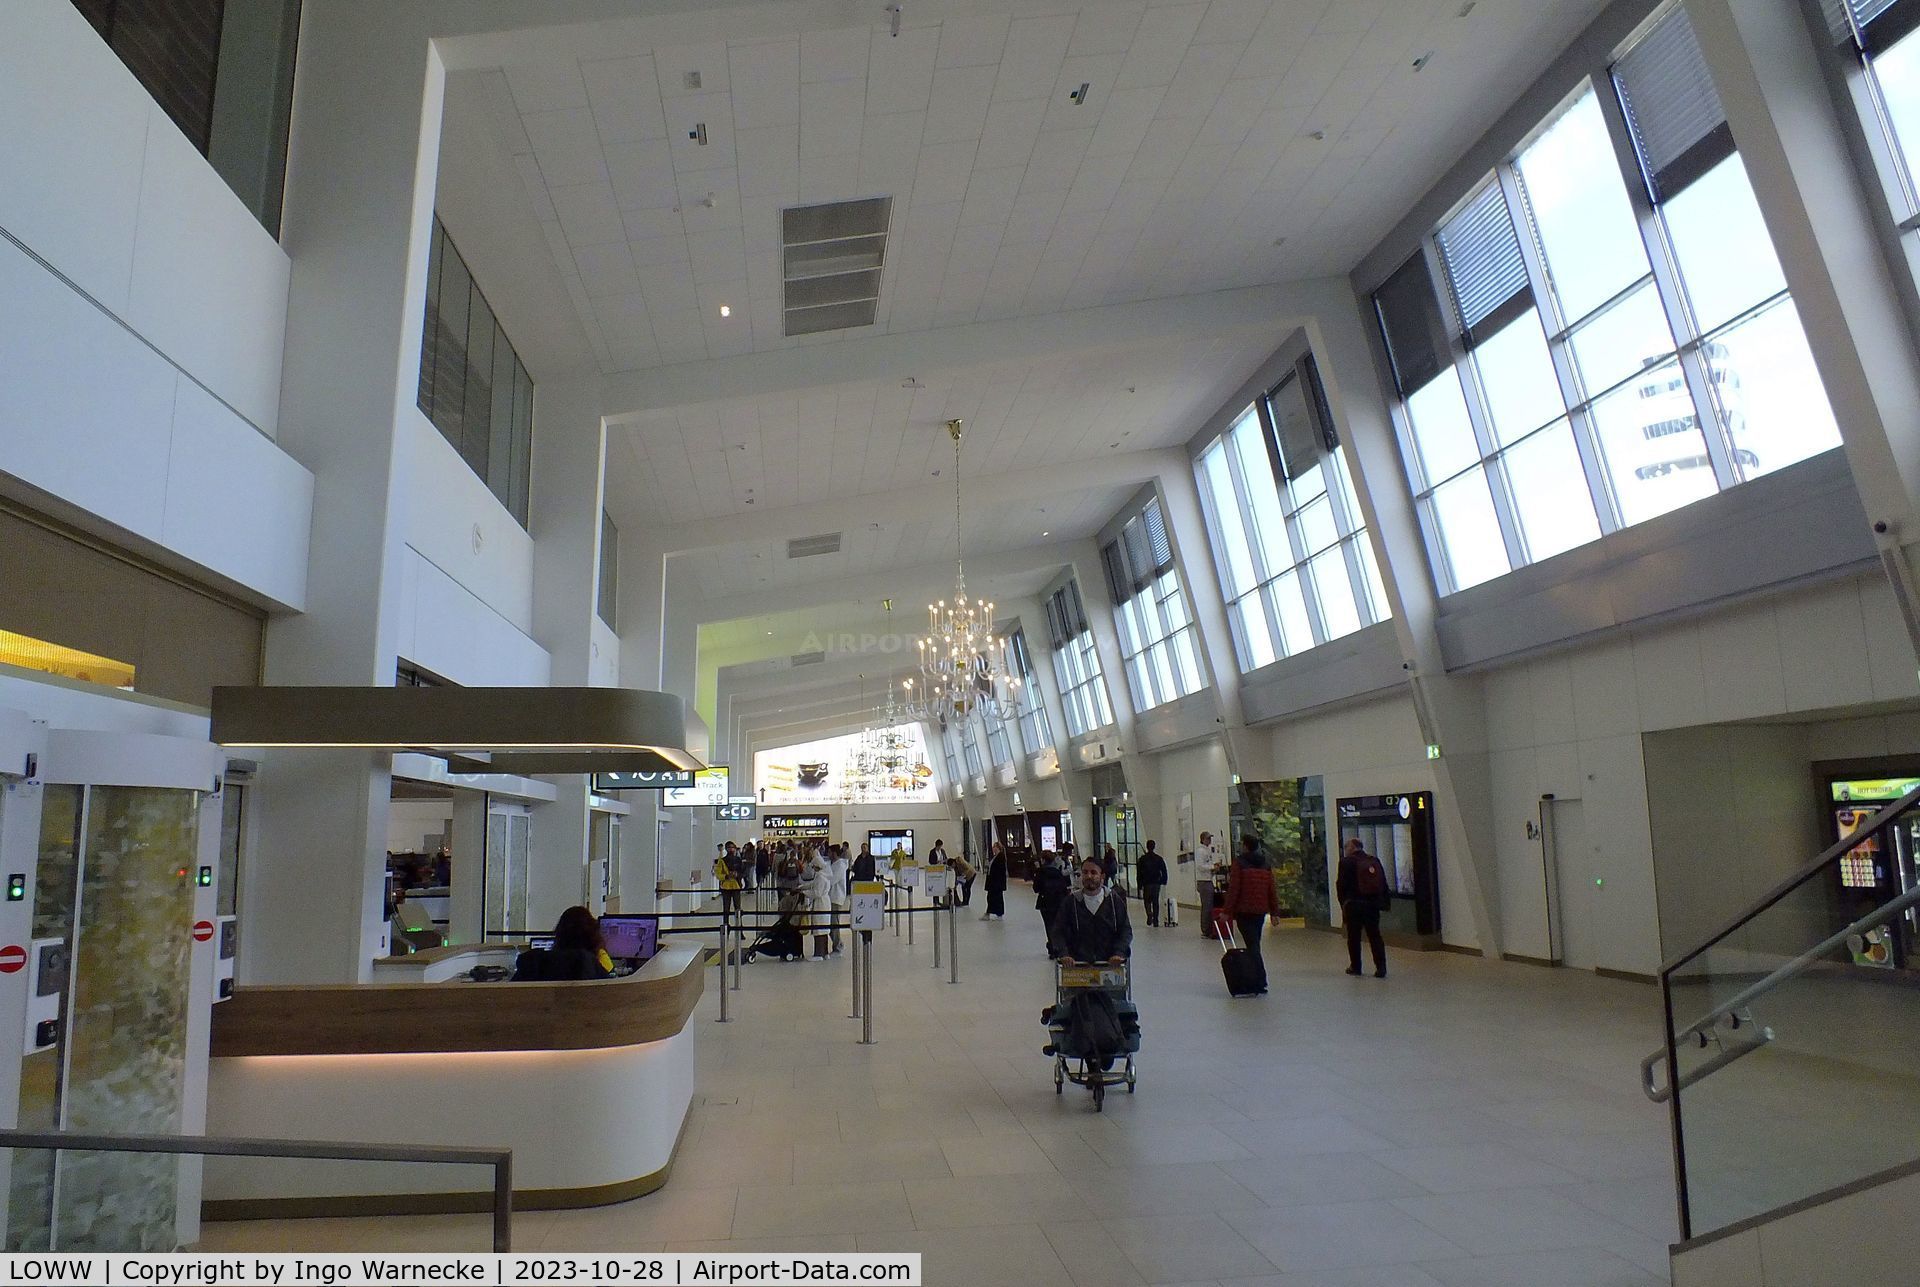 Vienna International Airport, Vienna Austria (LOWW) - inside terminal 1 (straight section, 'hall of chandeliers') at Wien airport